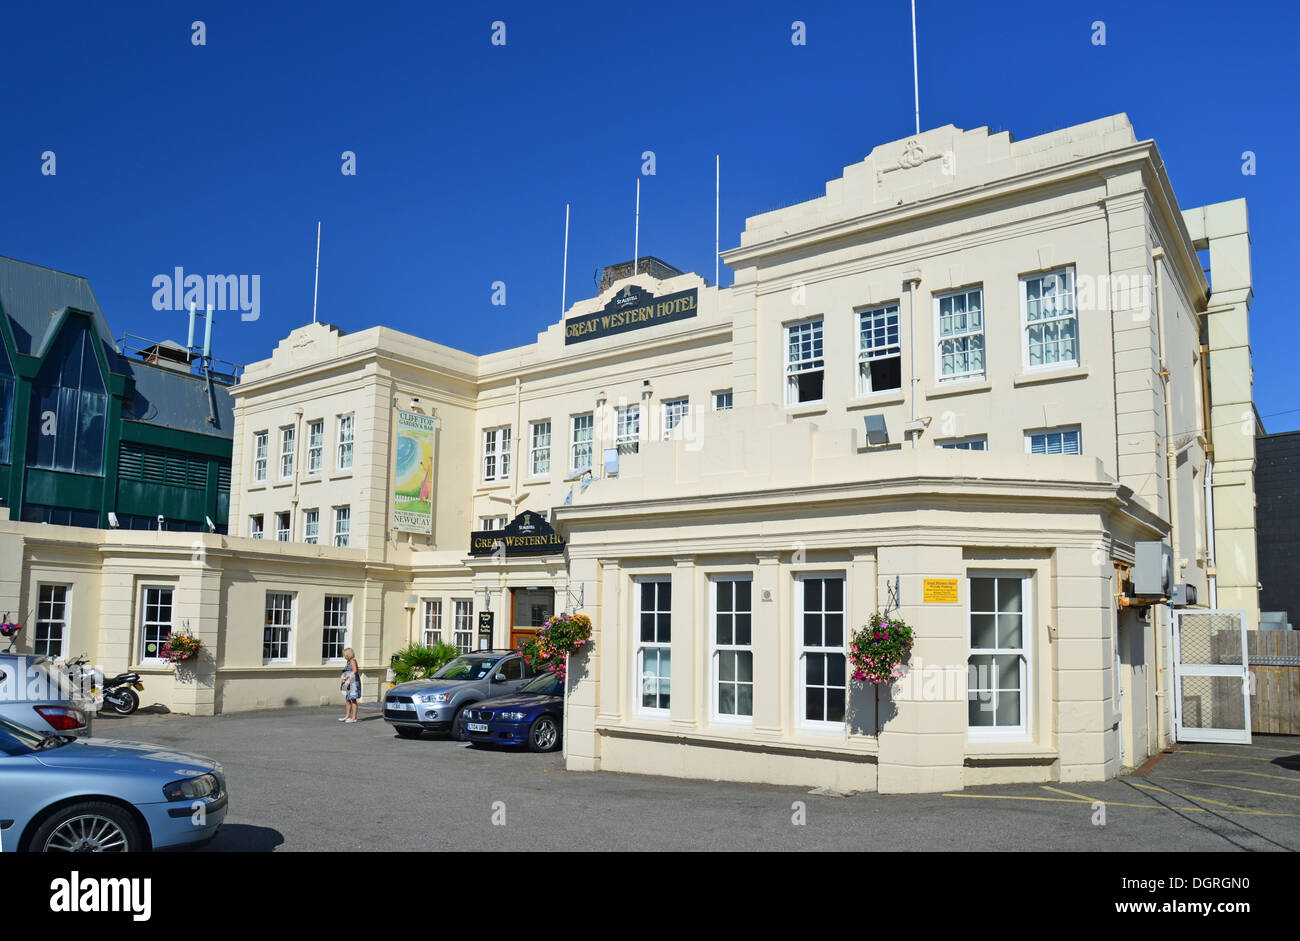 Great Western Hotel, Cliff Road, Newquay, Cornwall, England, United Kingdom Stock Photo